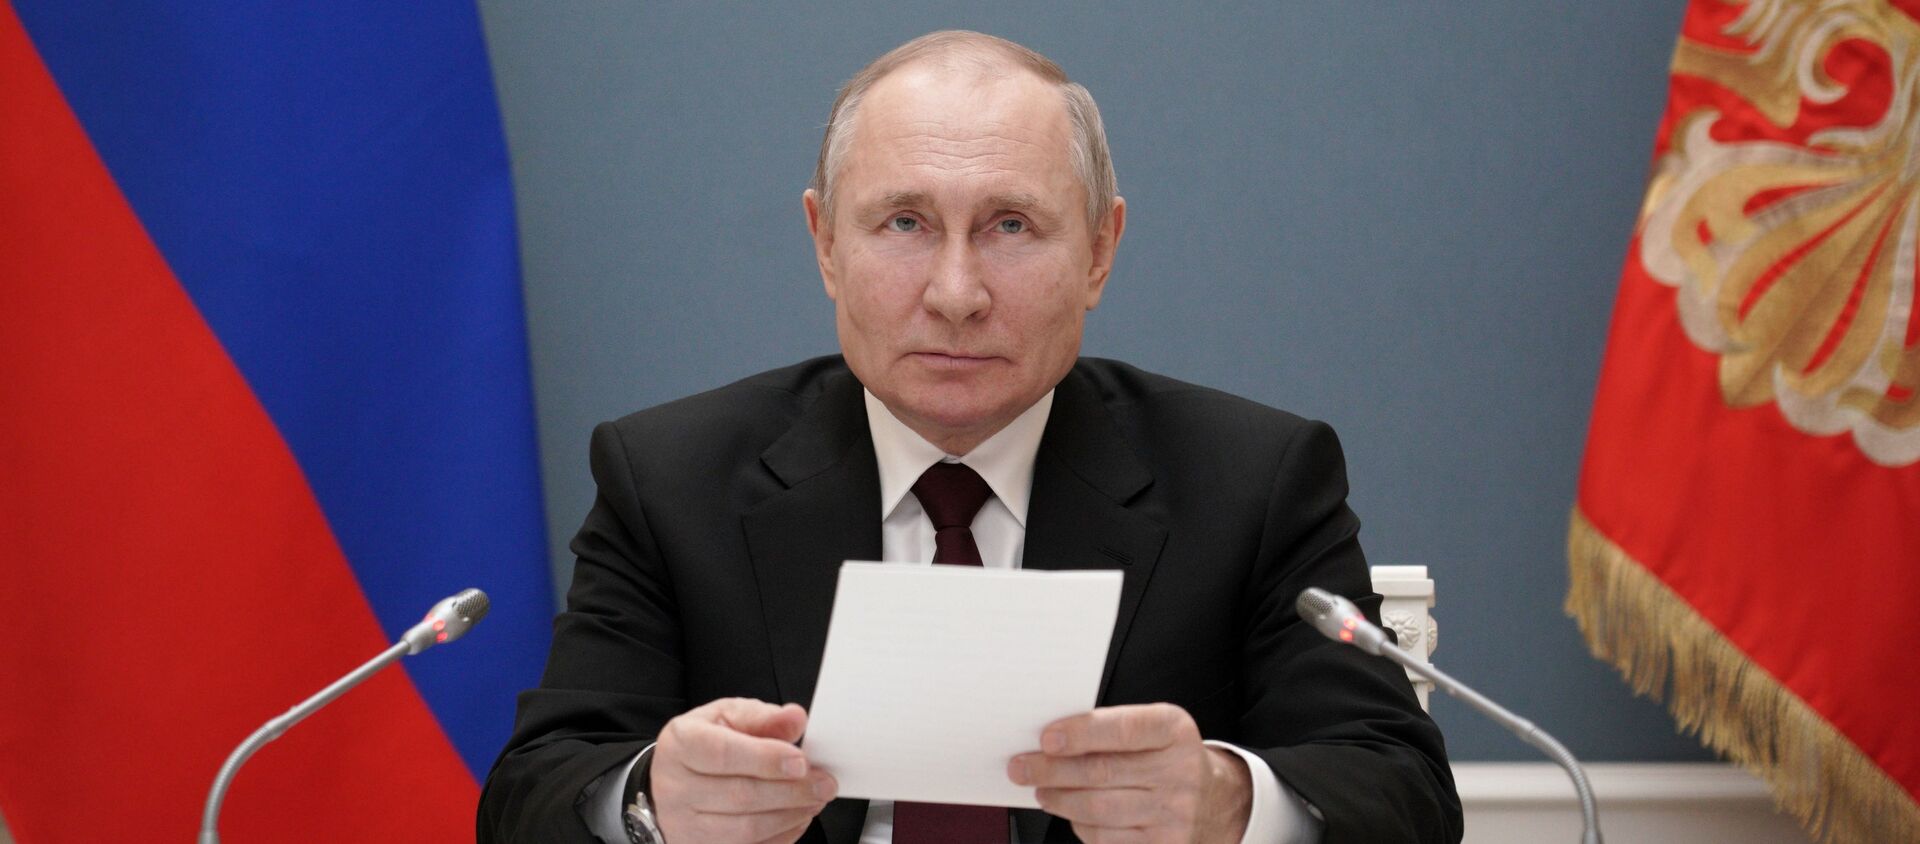 Rusijos prezidentas Vladimiras Putinas - Sputnik Lietuva, 1920, 24.03.2021